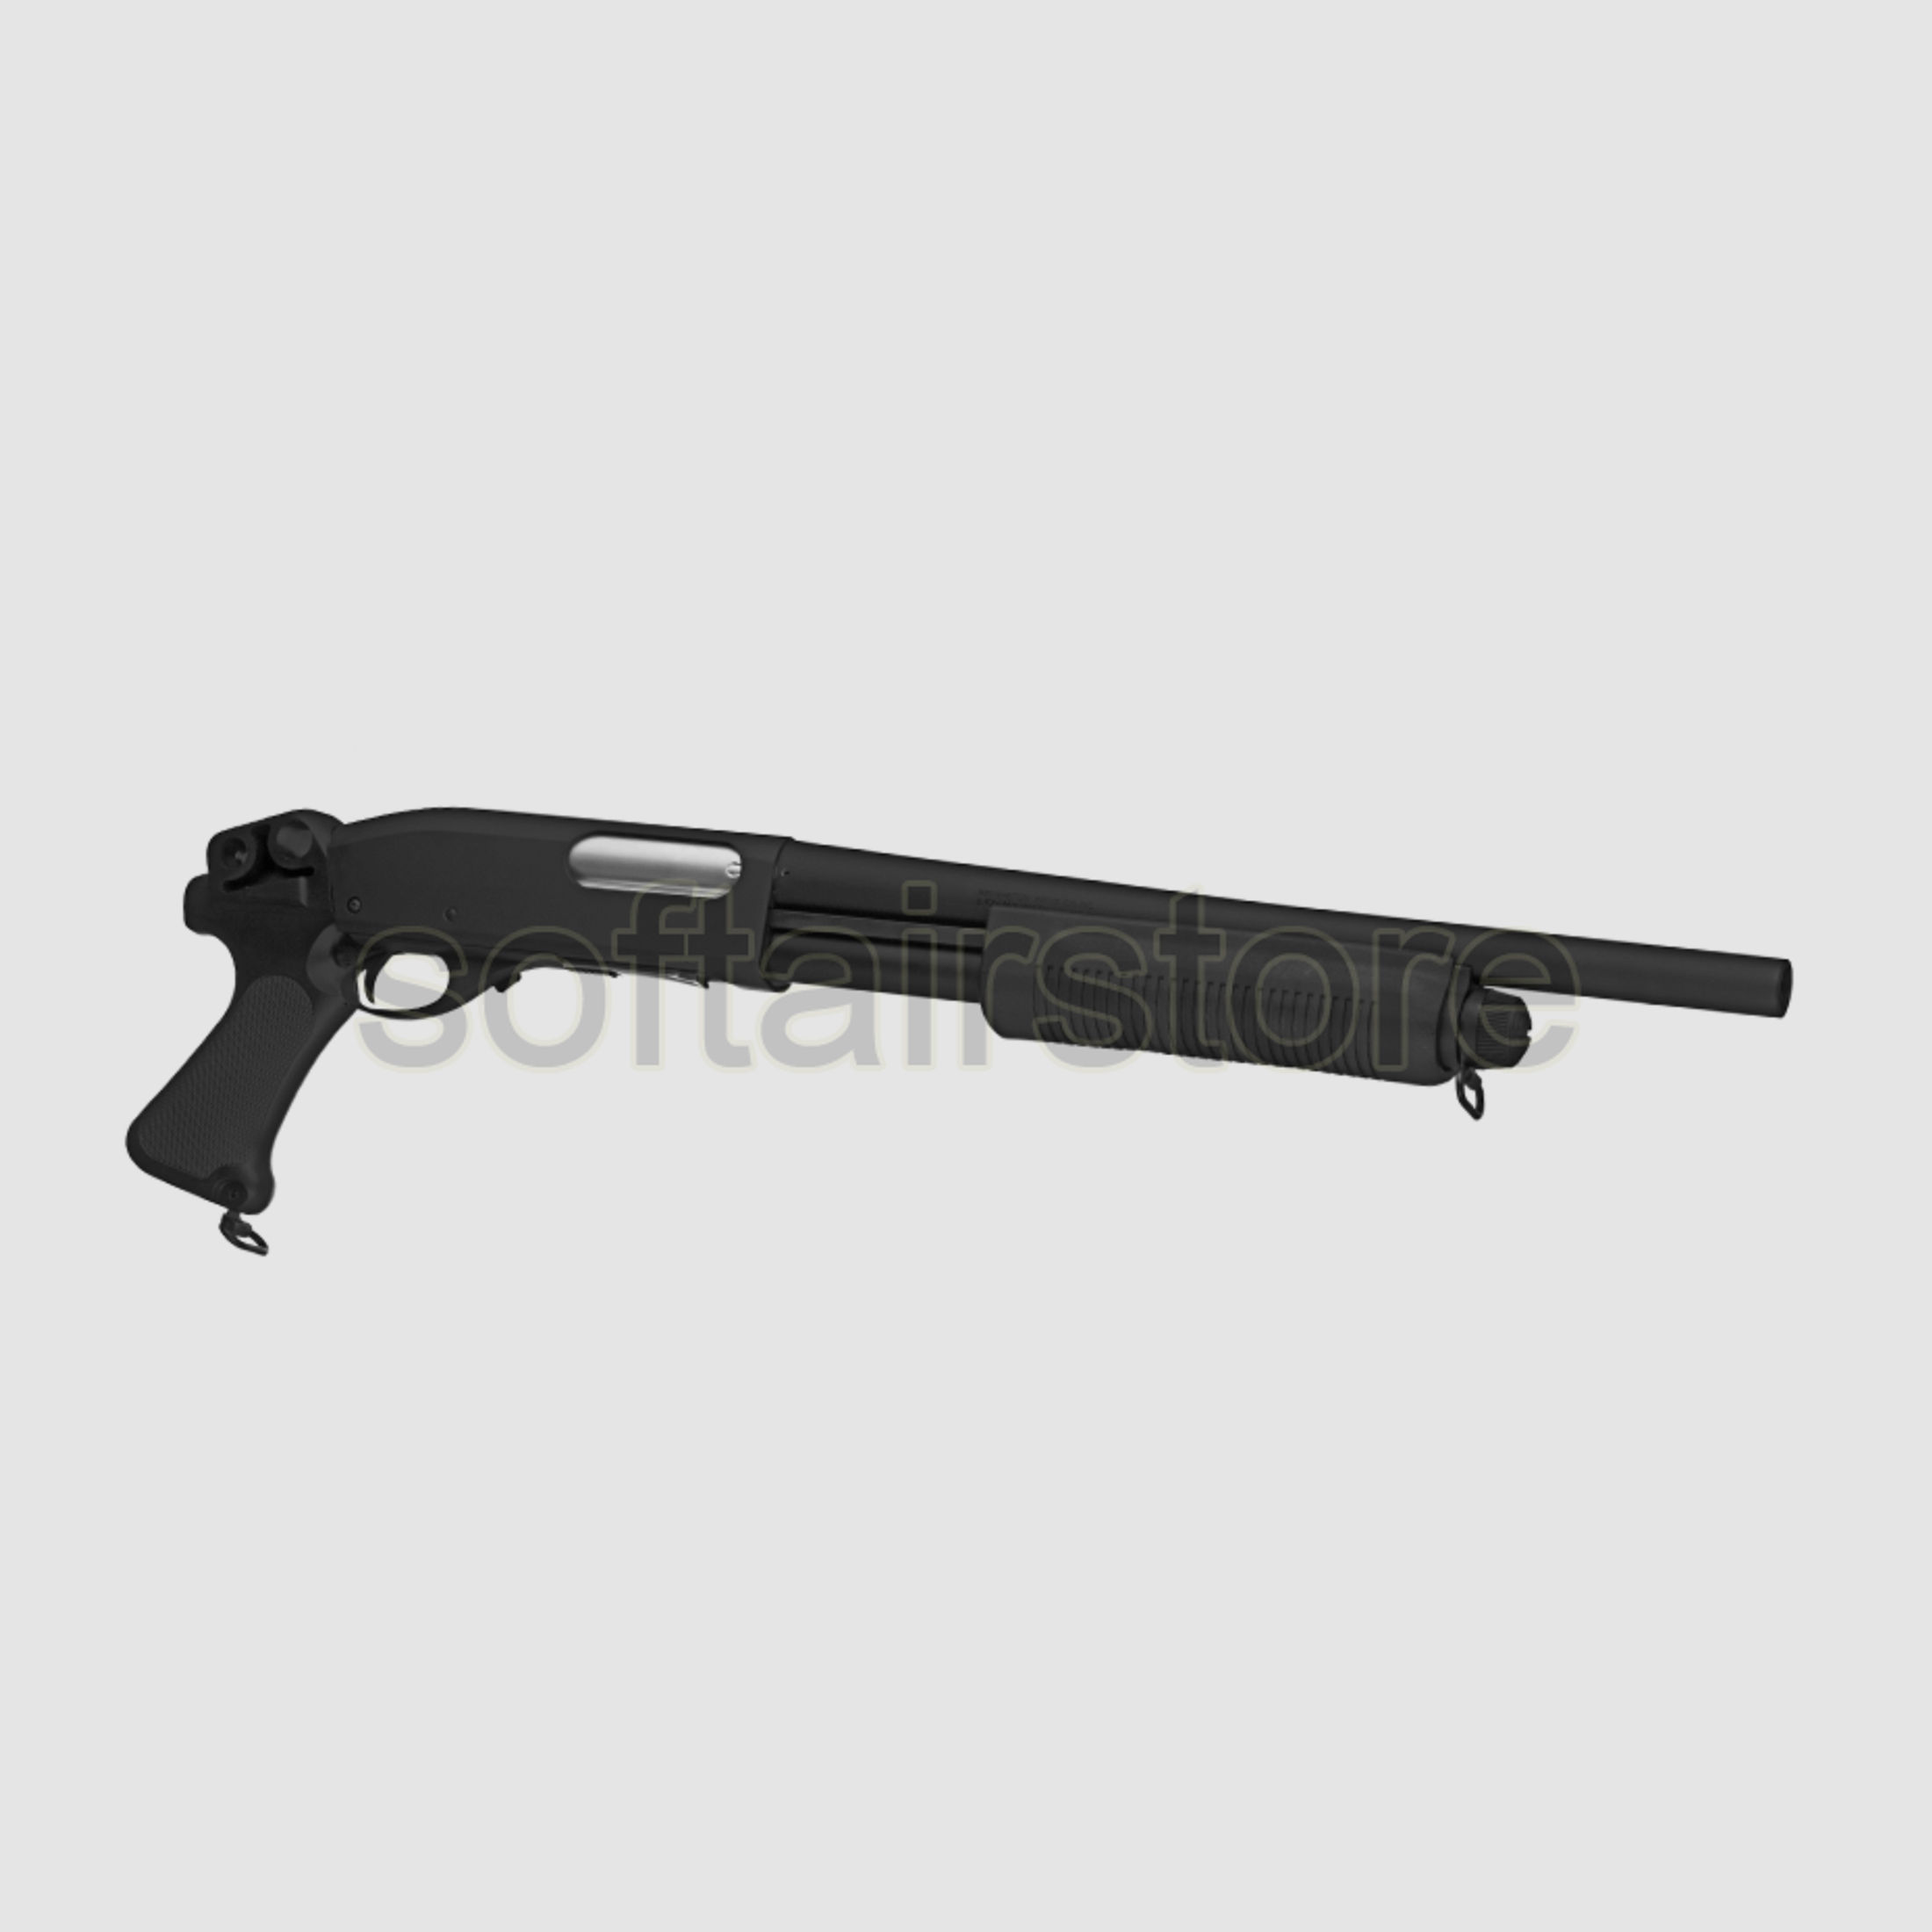 M870 Medium Shotgun (G&P)